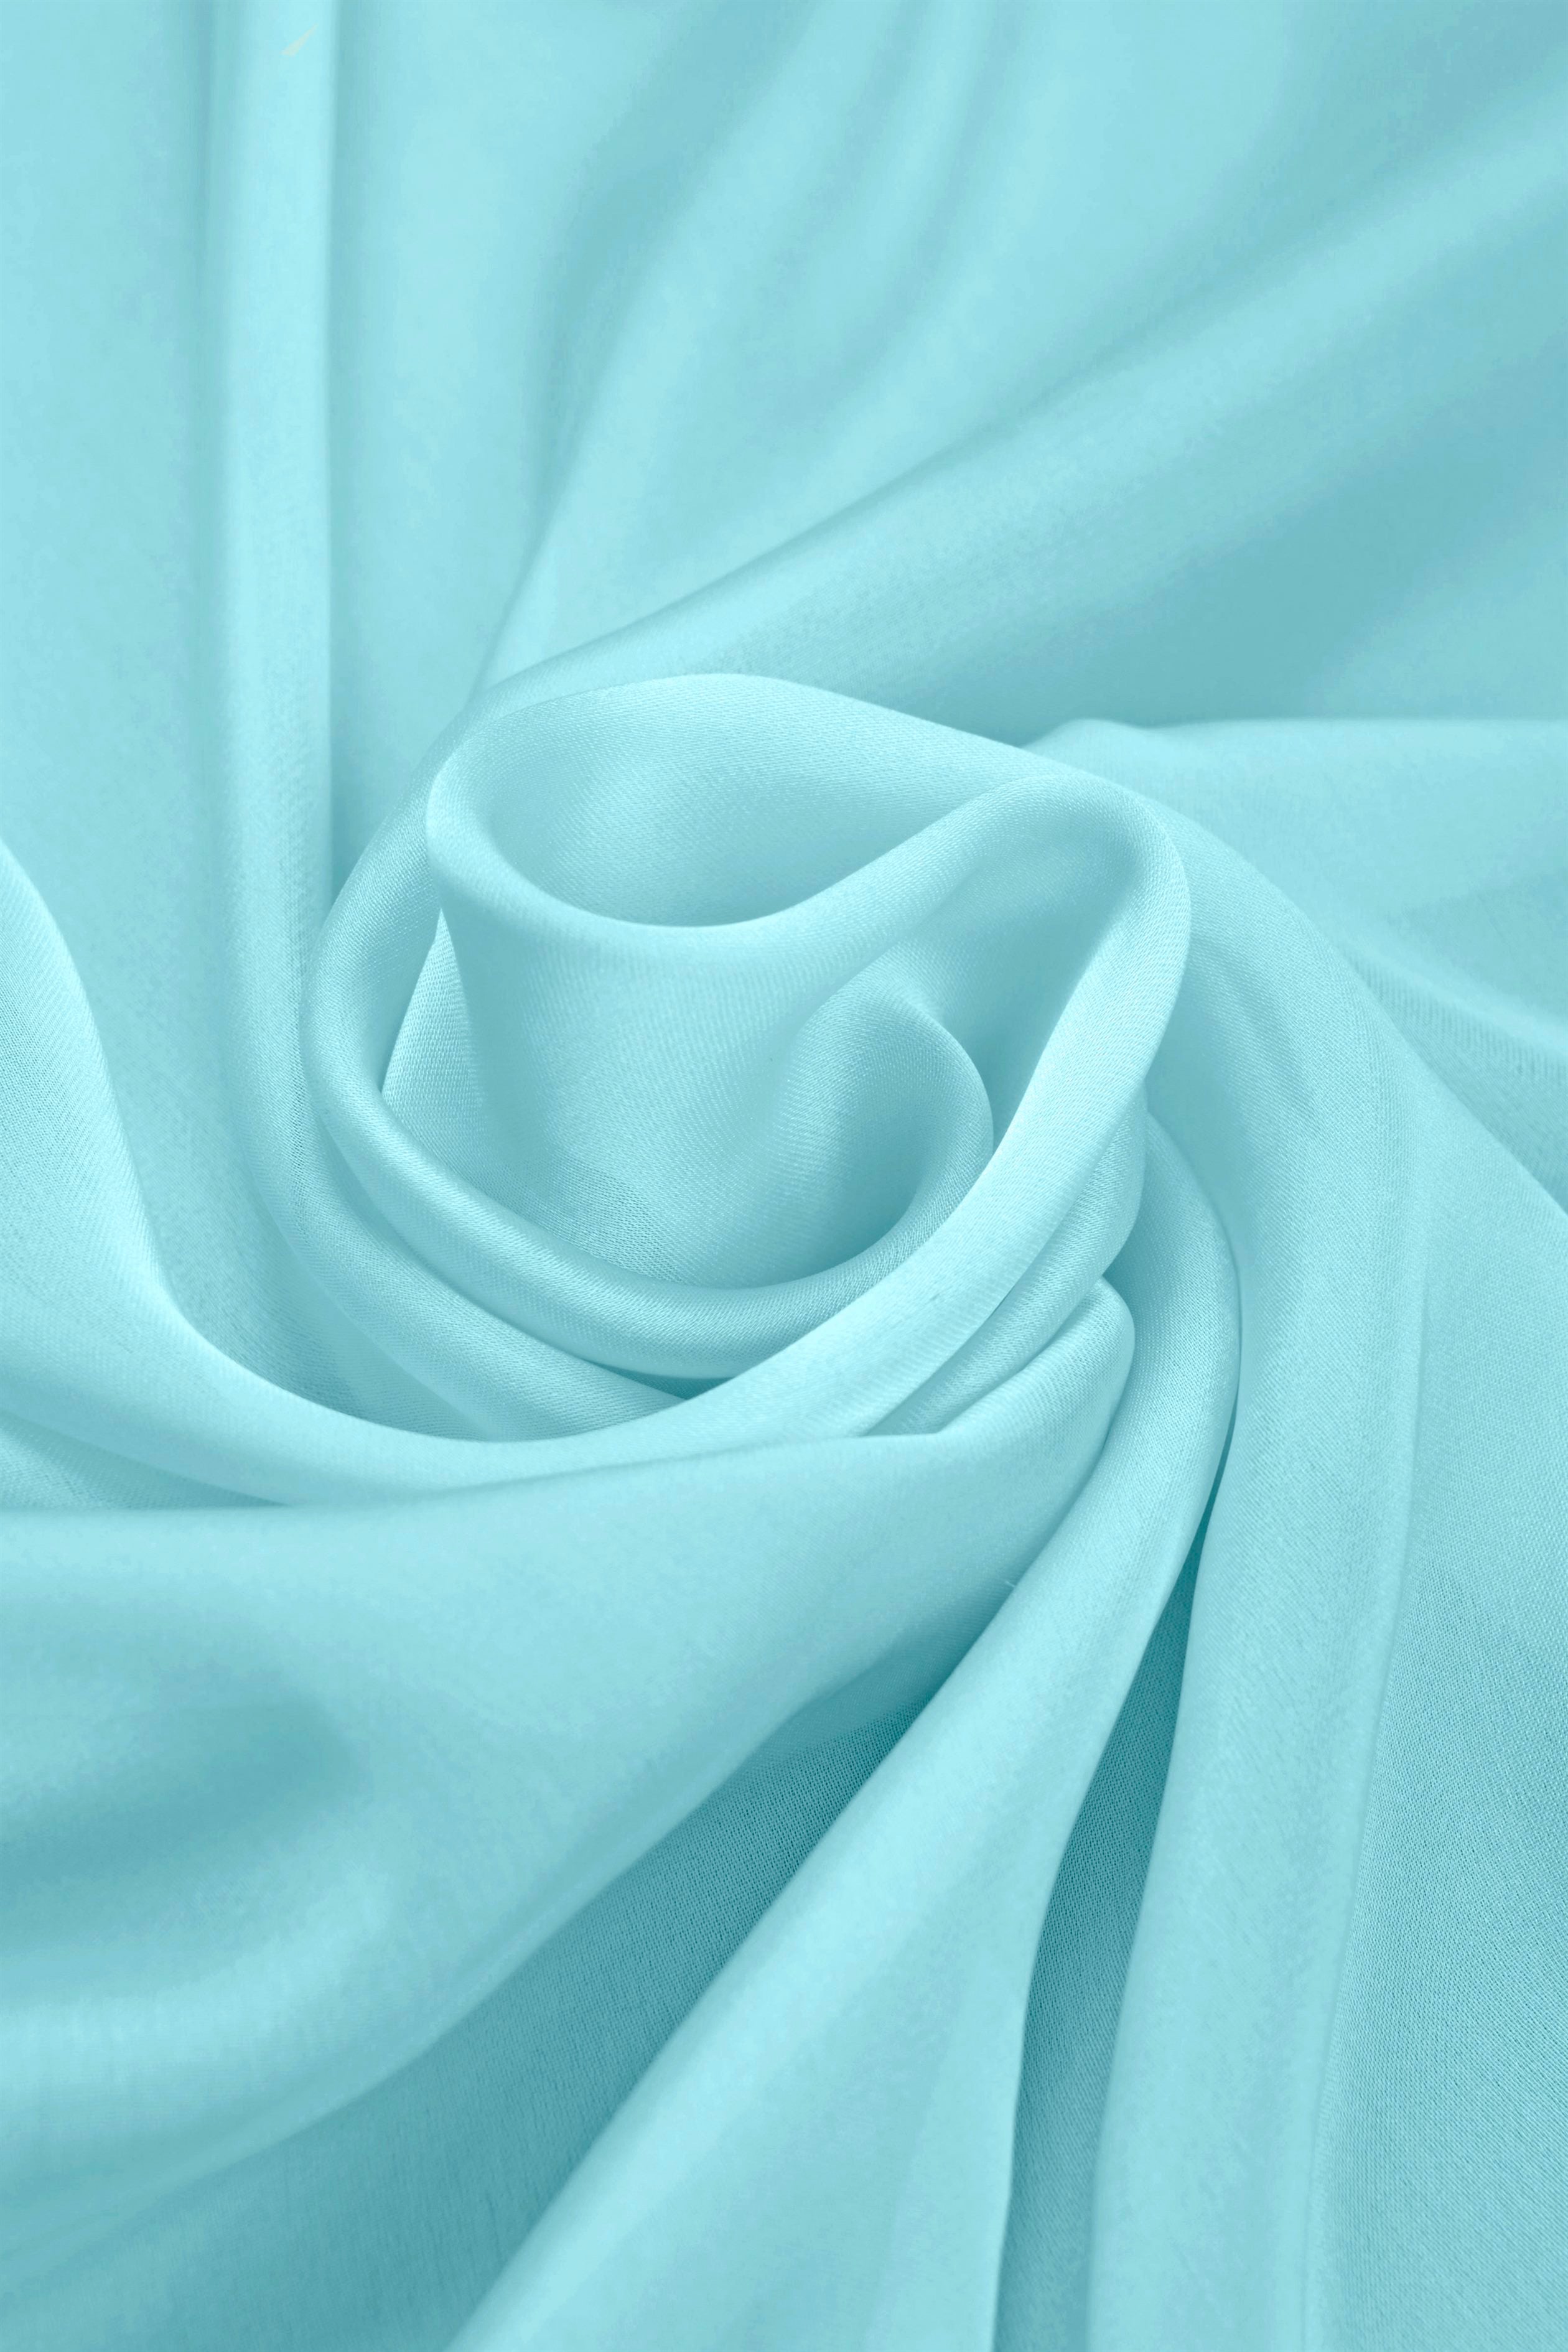 Sky Blue Plain Dyed Satin Georgette Fabric